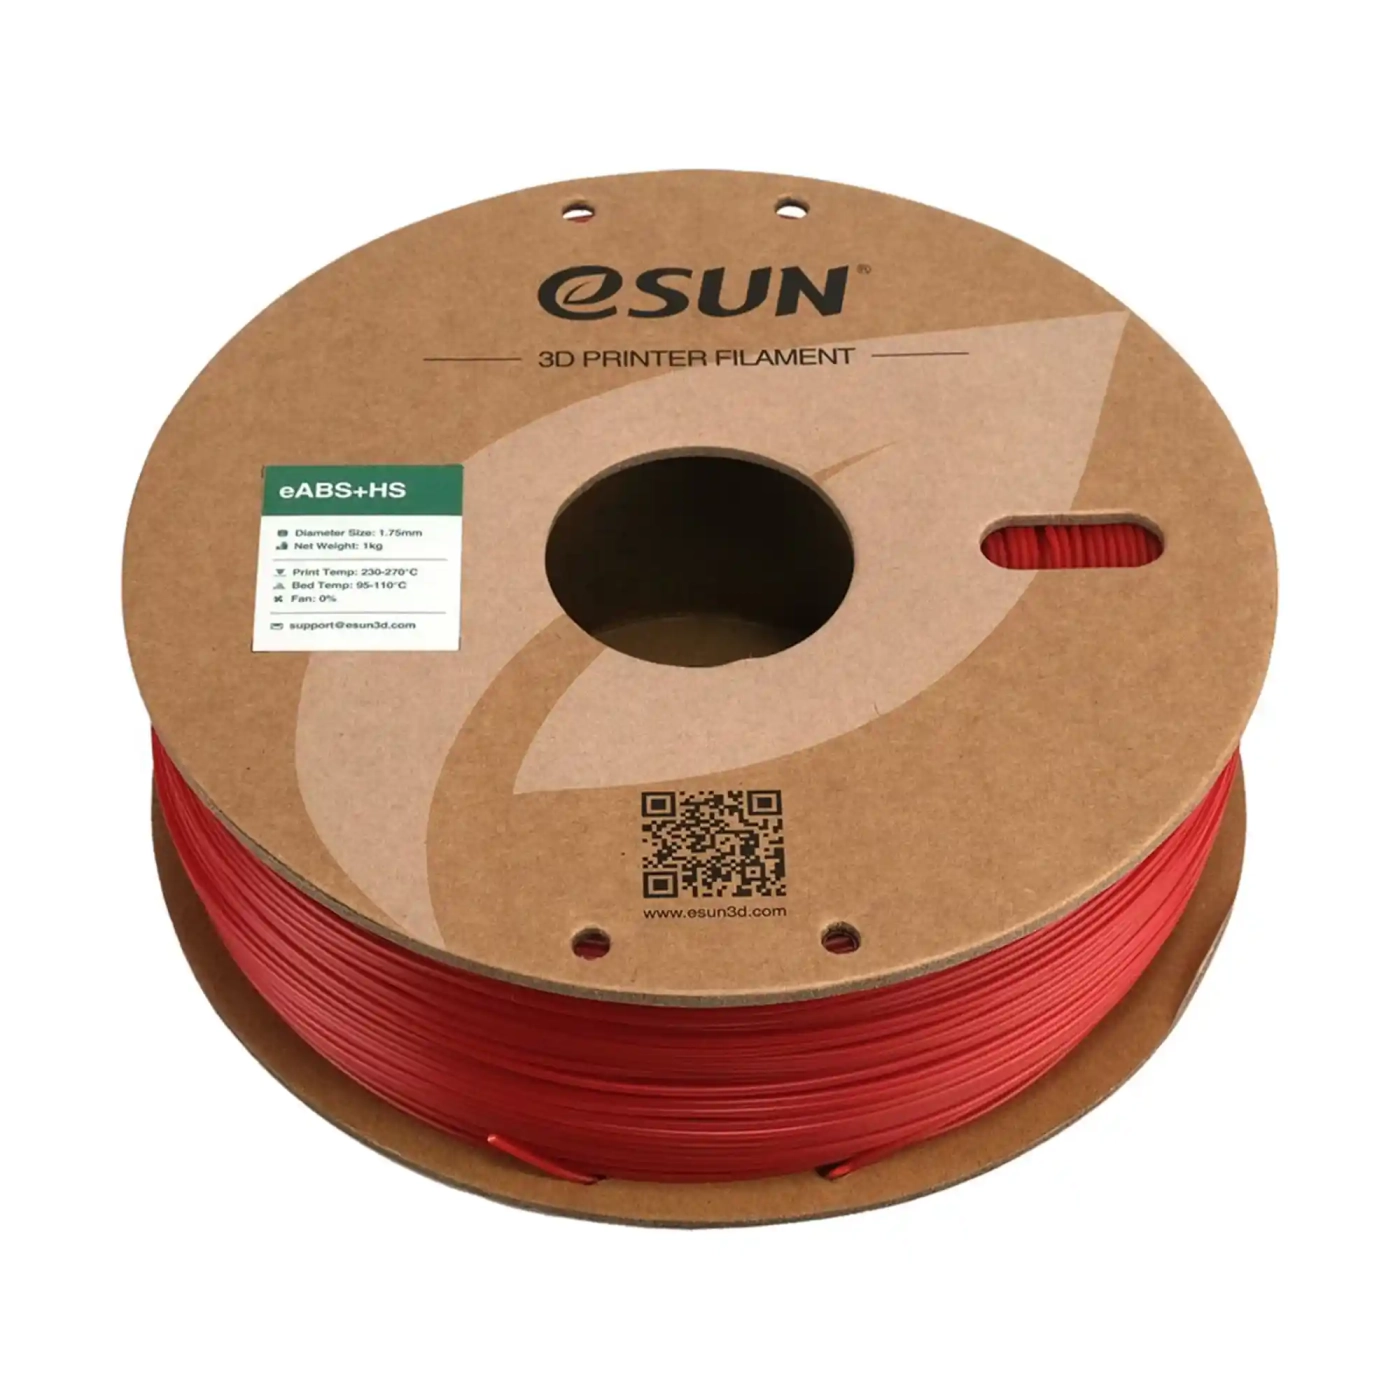 Купити eABS+HS Filament (пластик) для 3D принтера Esun 1кг, 1.75мм, пожежний-червоний (eABS+HS-175FR1) - фото 3